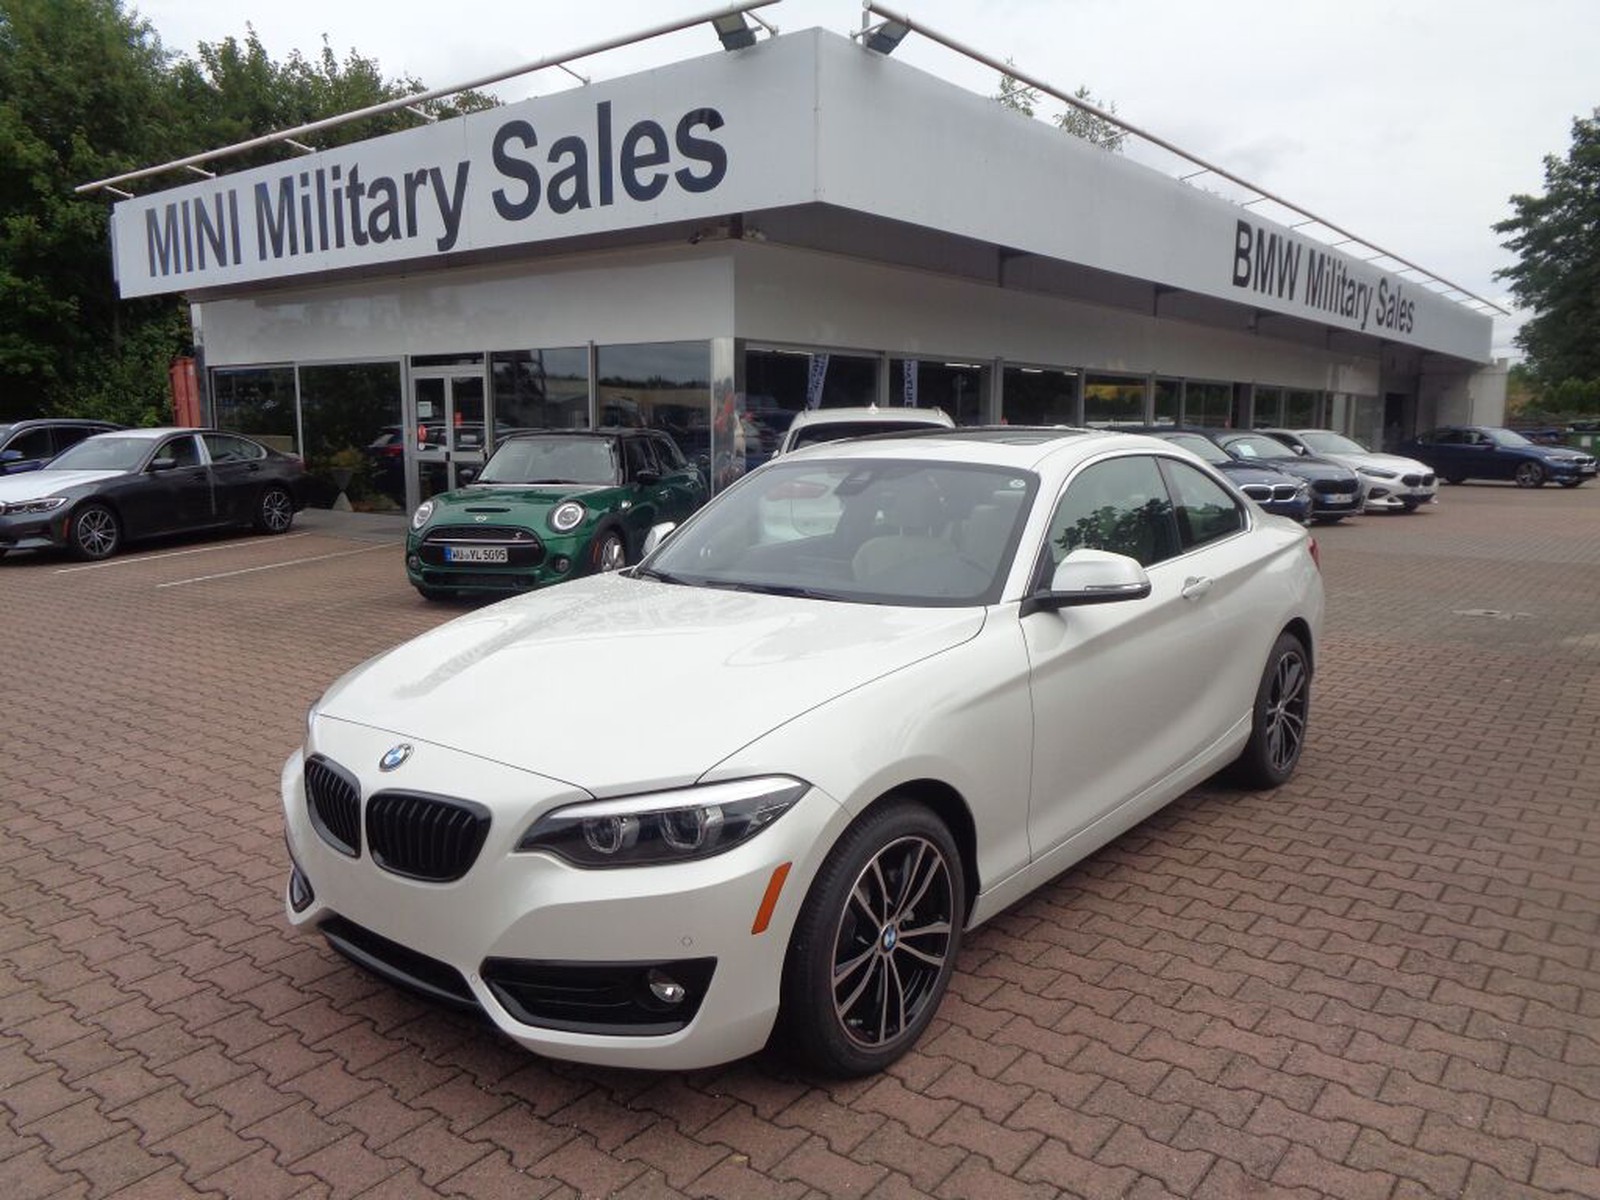 BMW 230 i Coupe - Tax Free Military Sales in Peachtree Corners, GA